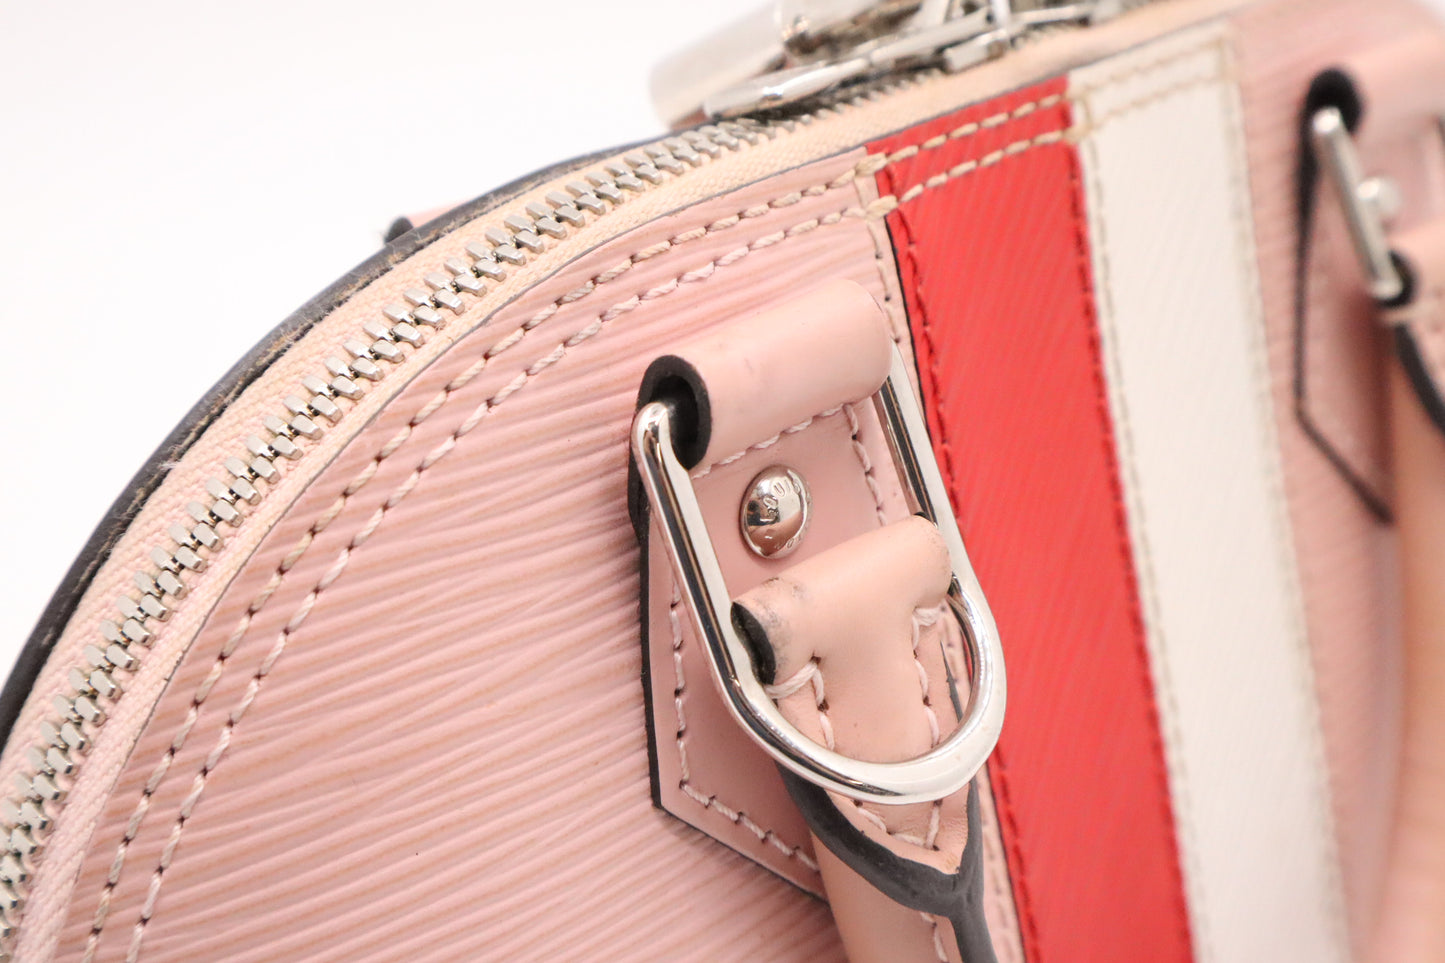 Louis Vuitton Alma BB in Pink Red & White Epi Leather